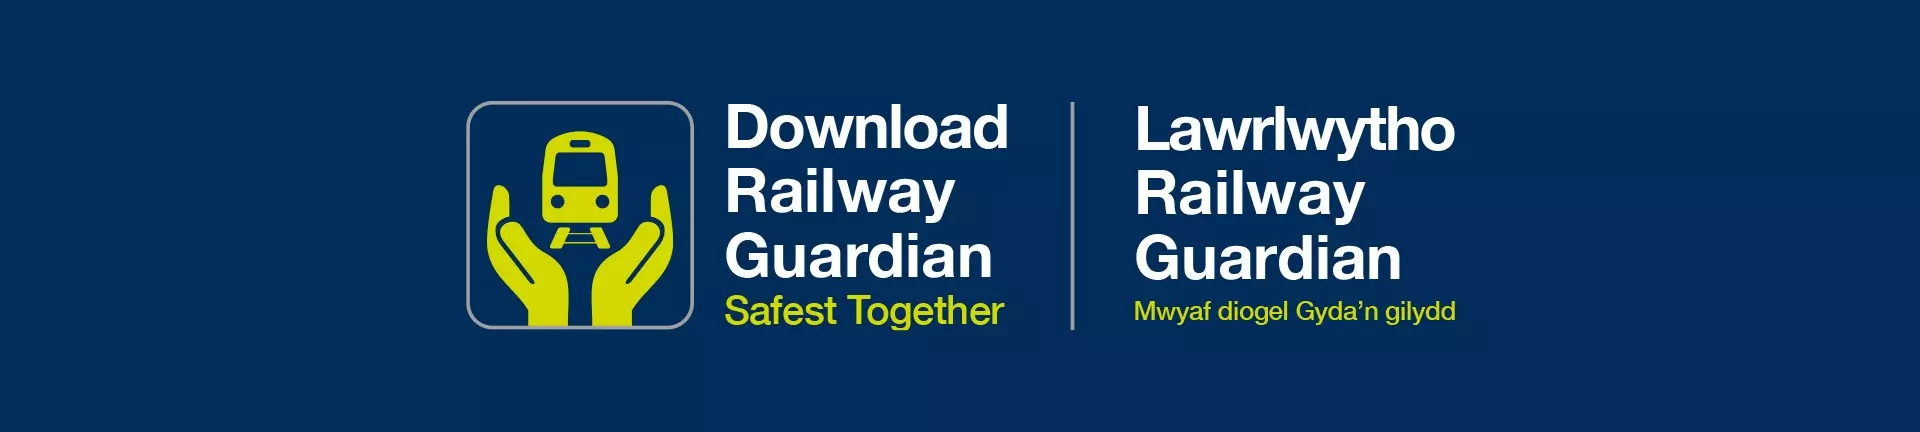 Railway Guardian logo